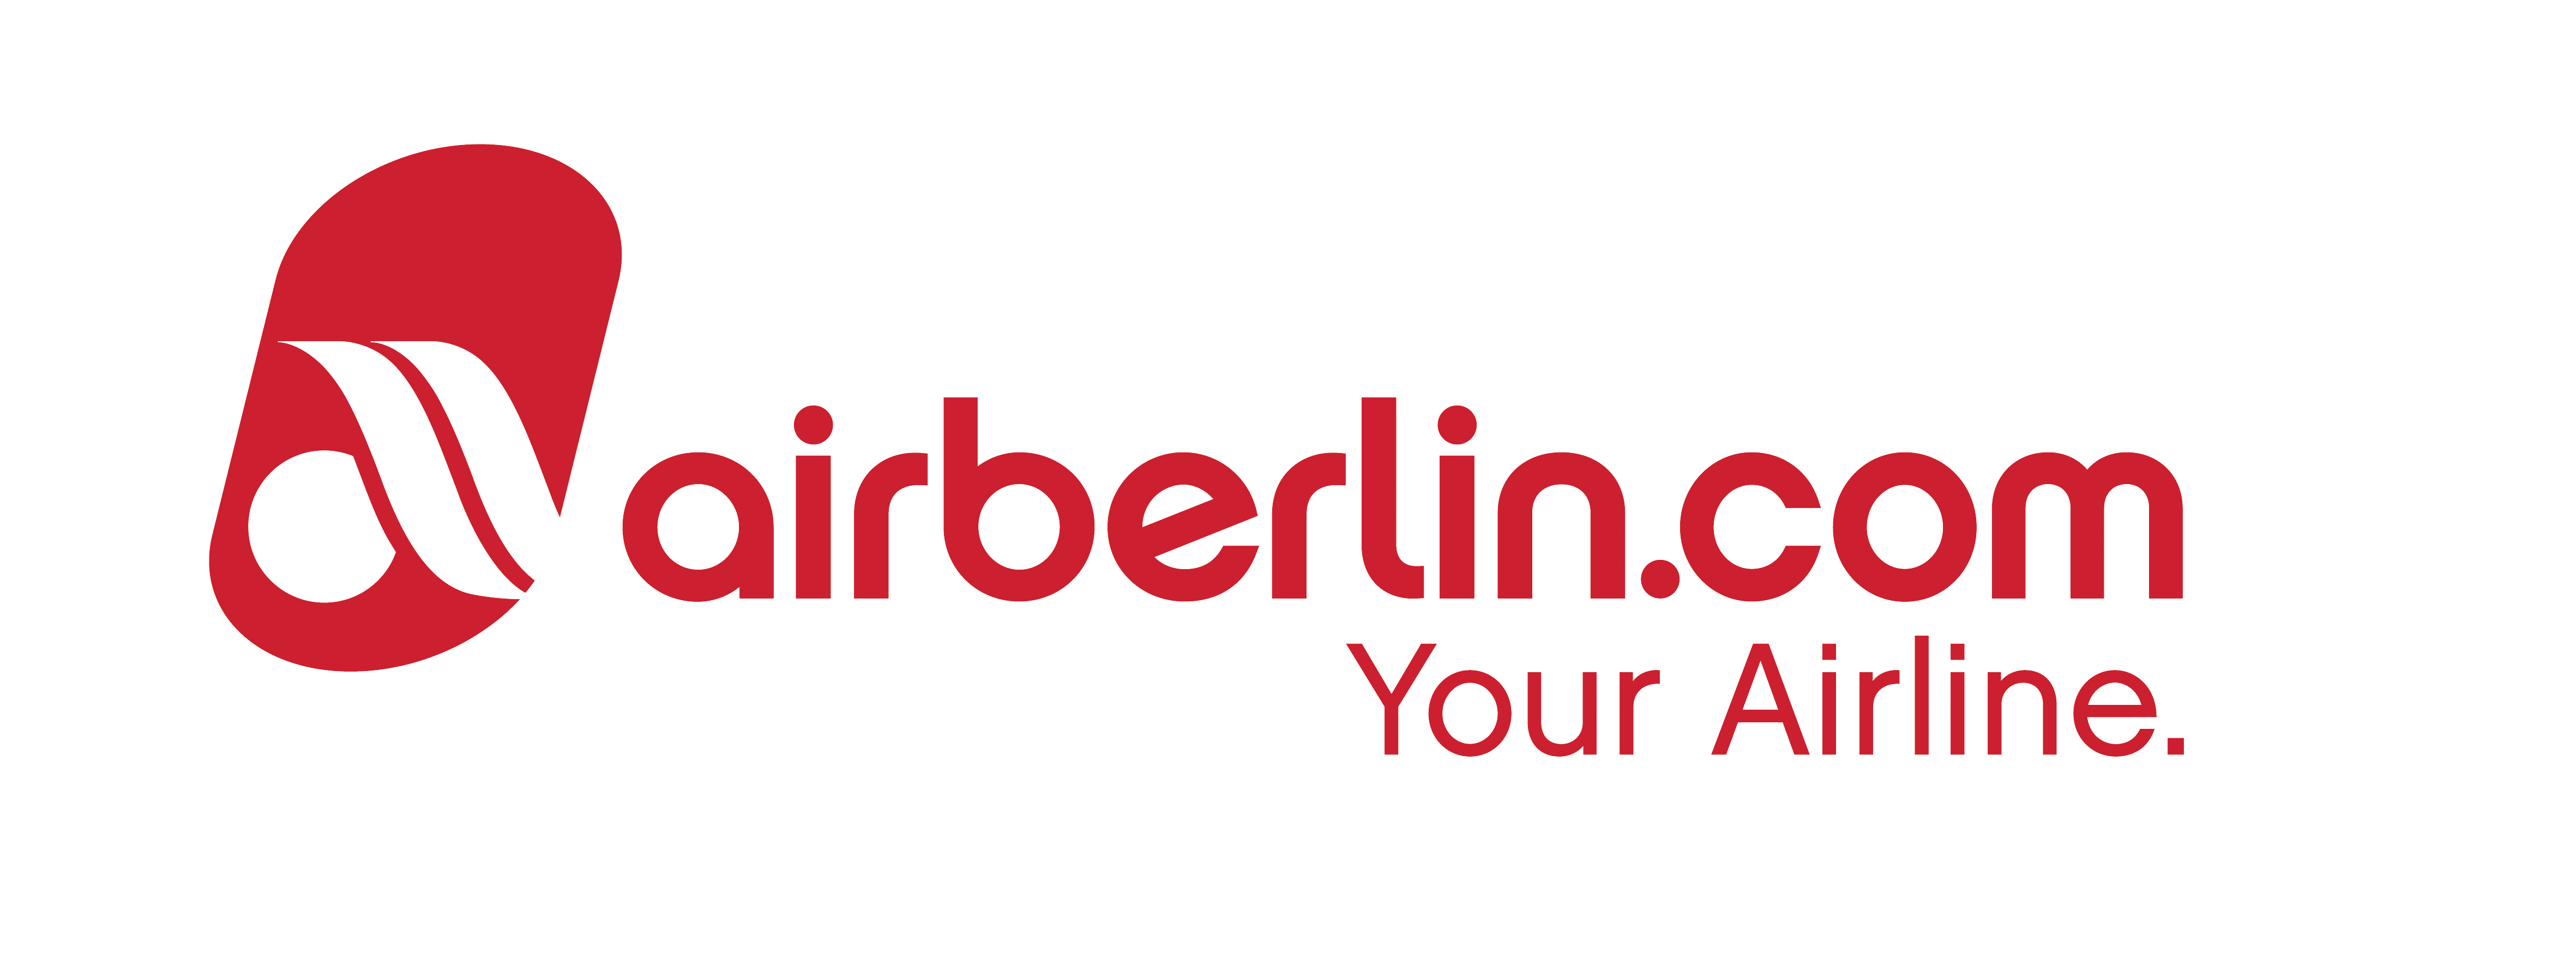 Logo Airberlin Com 2009.jpg - Air Berlin Vector, Transparent background PNG HD thumbnail